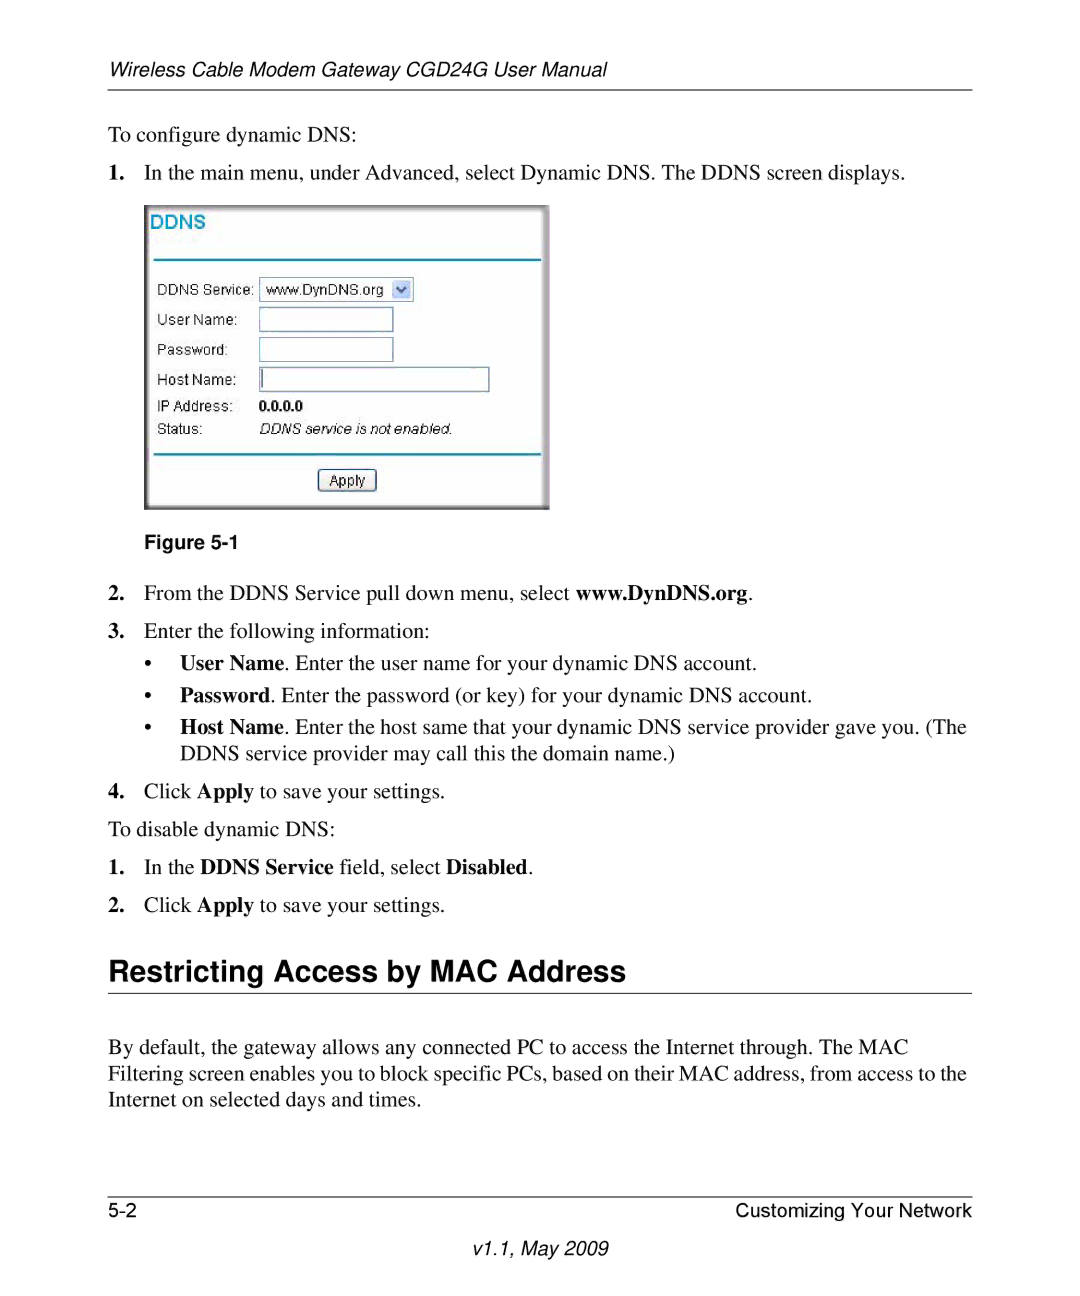 Gateway CGD24G user manual Restricting Access by MAC Address 